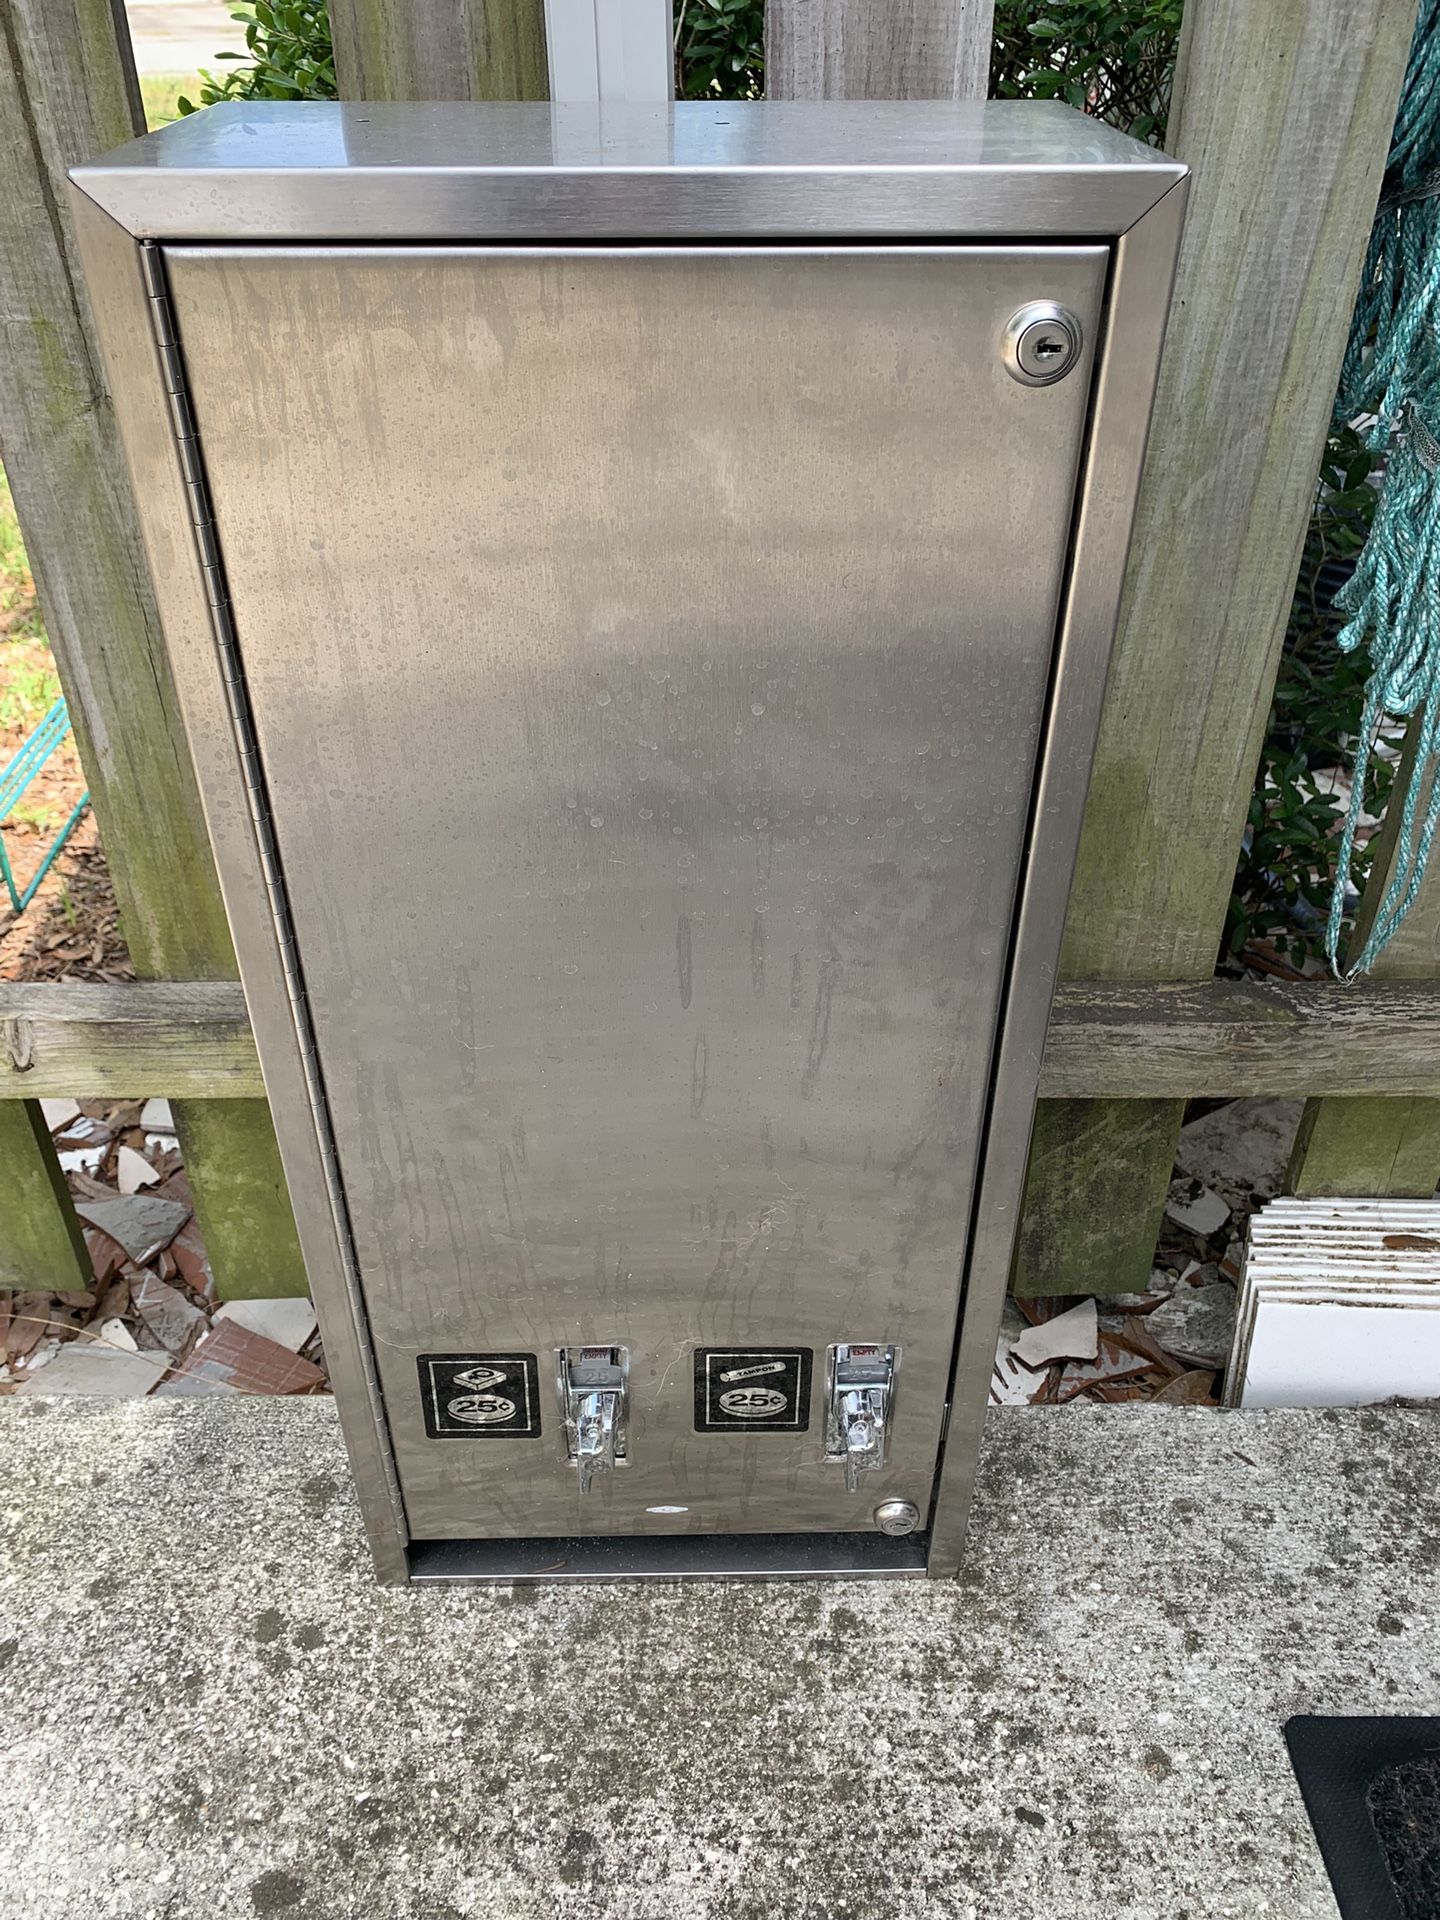 Tampon/Pad Vending machine 